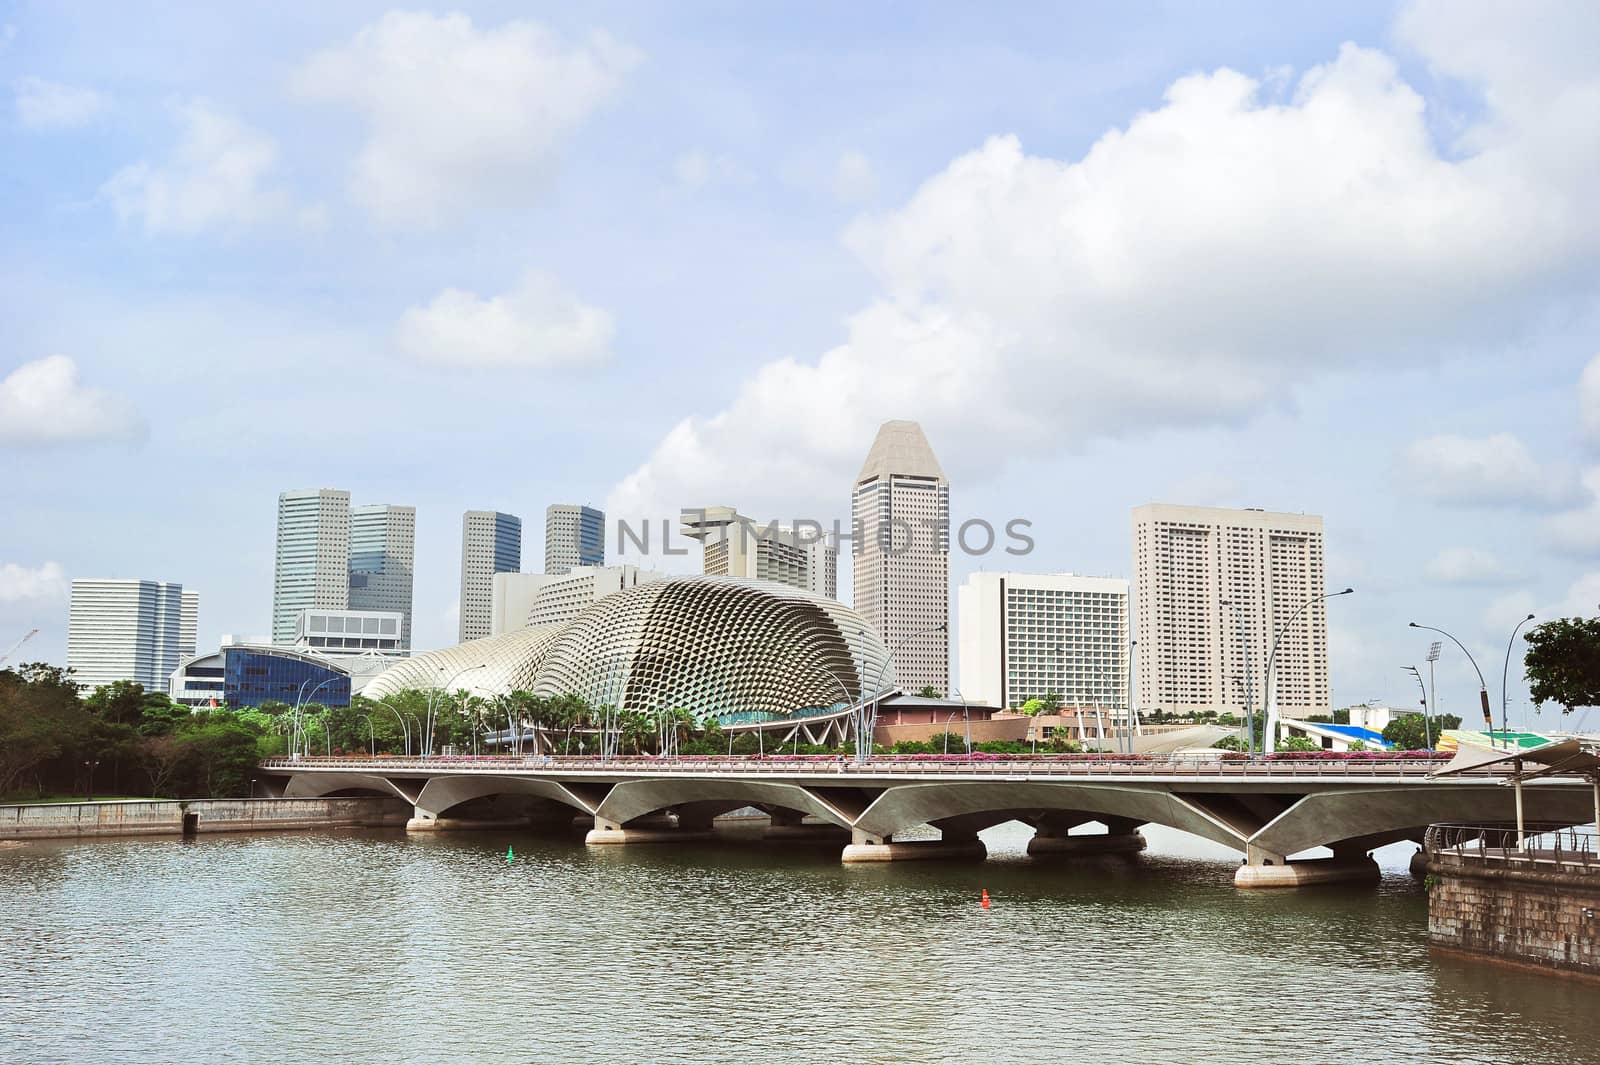 Architecture of Singapore by joyfull